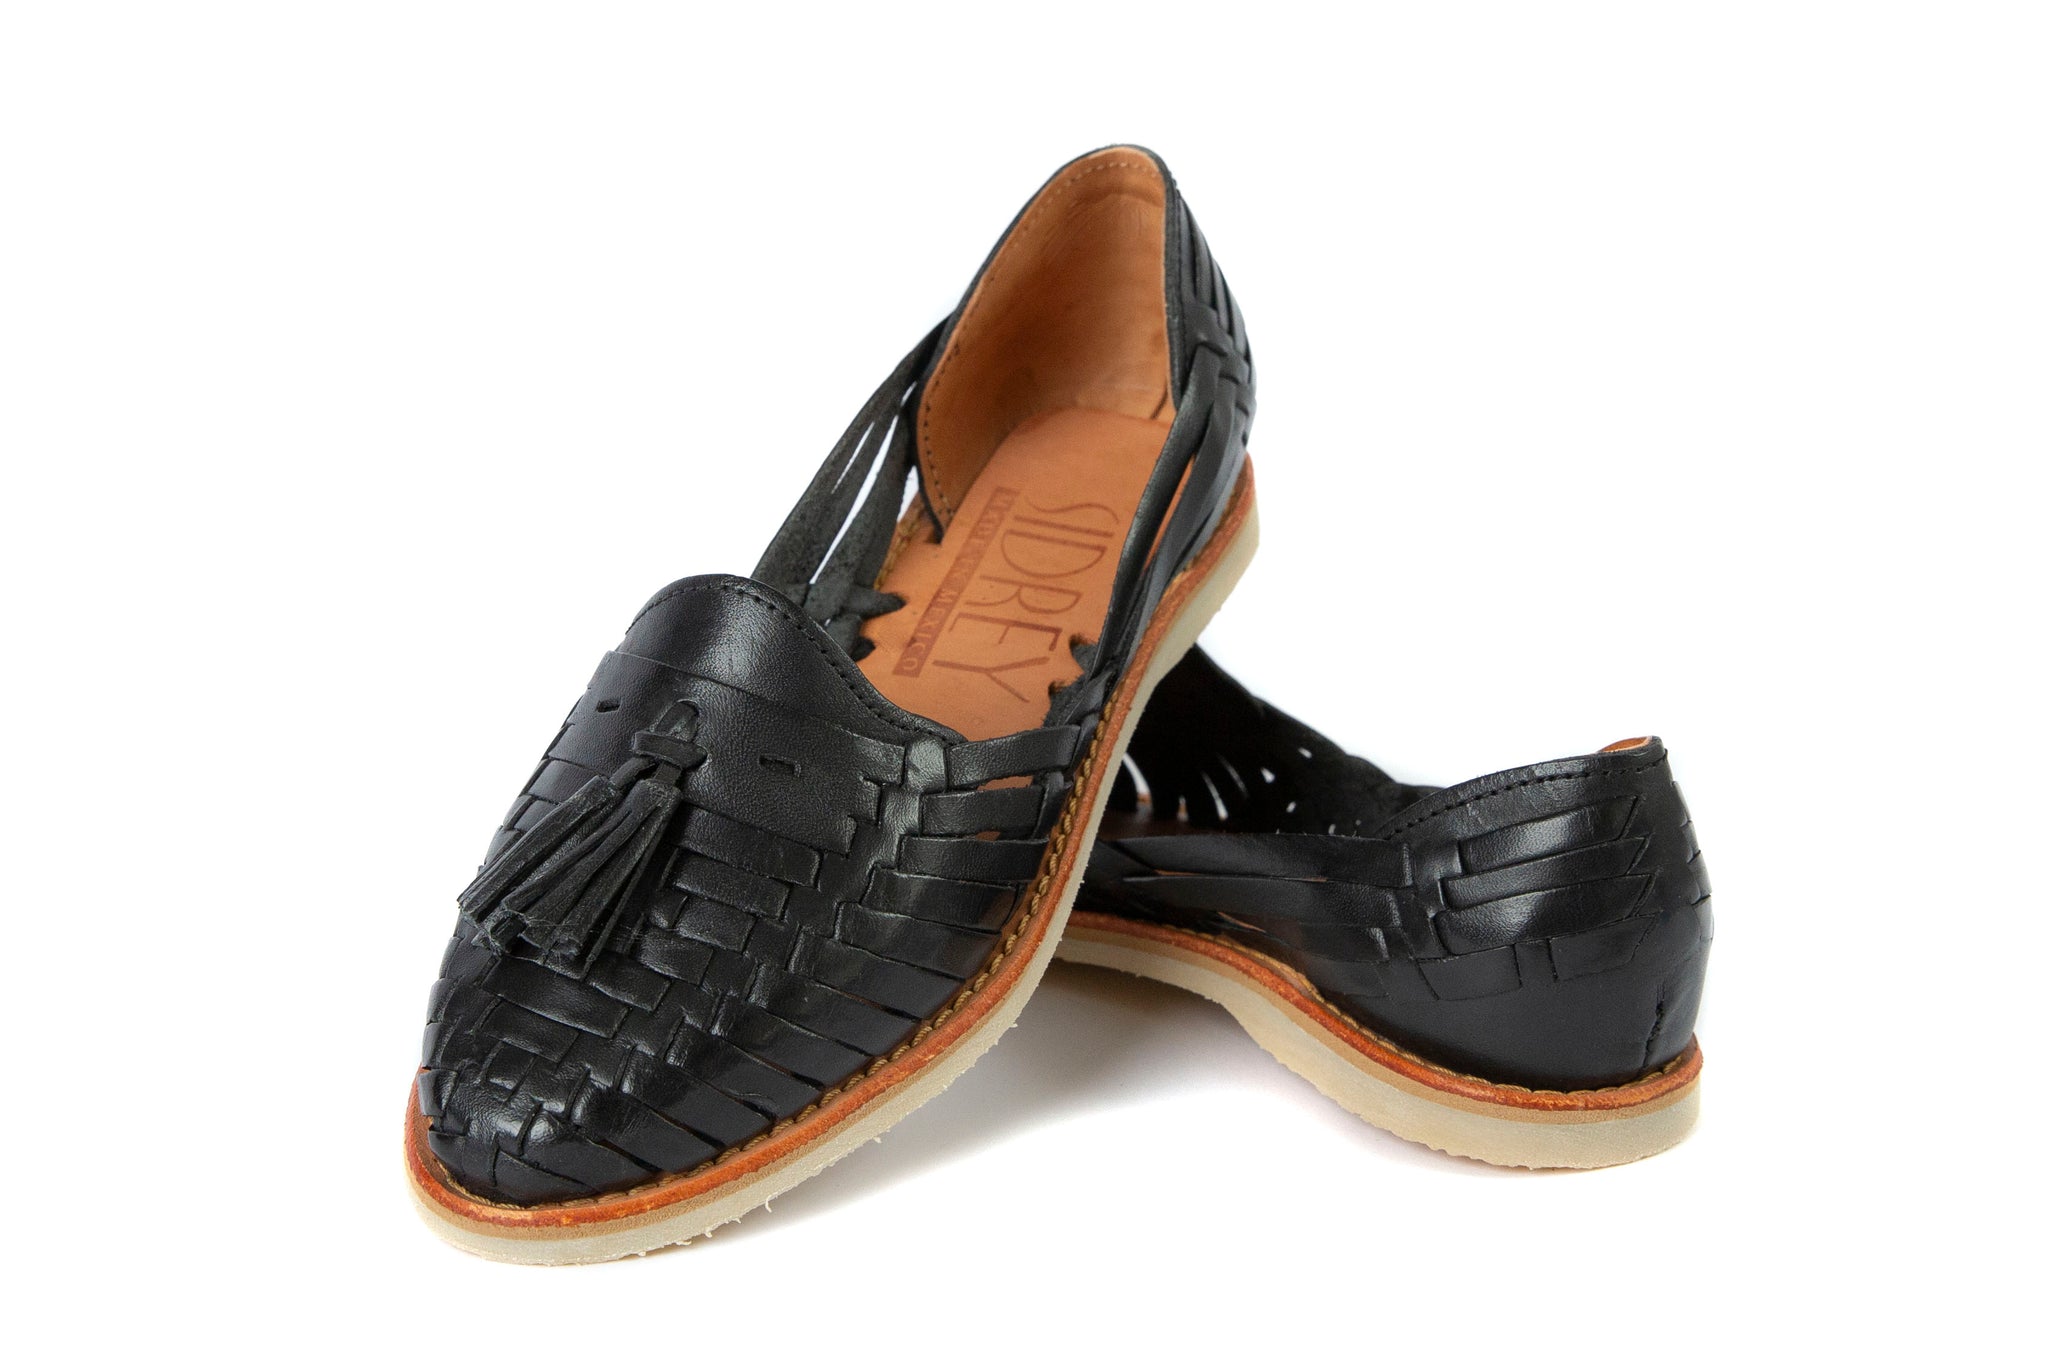 black huarache sandals